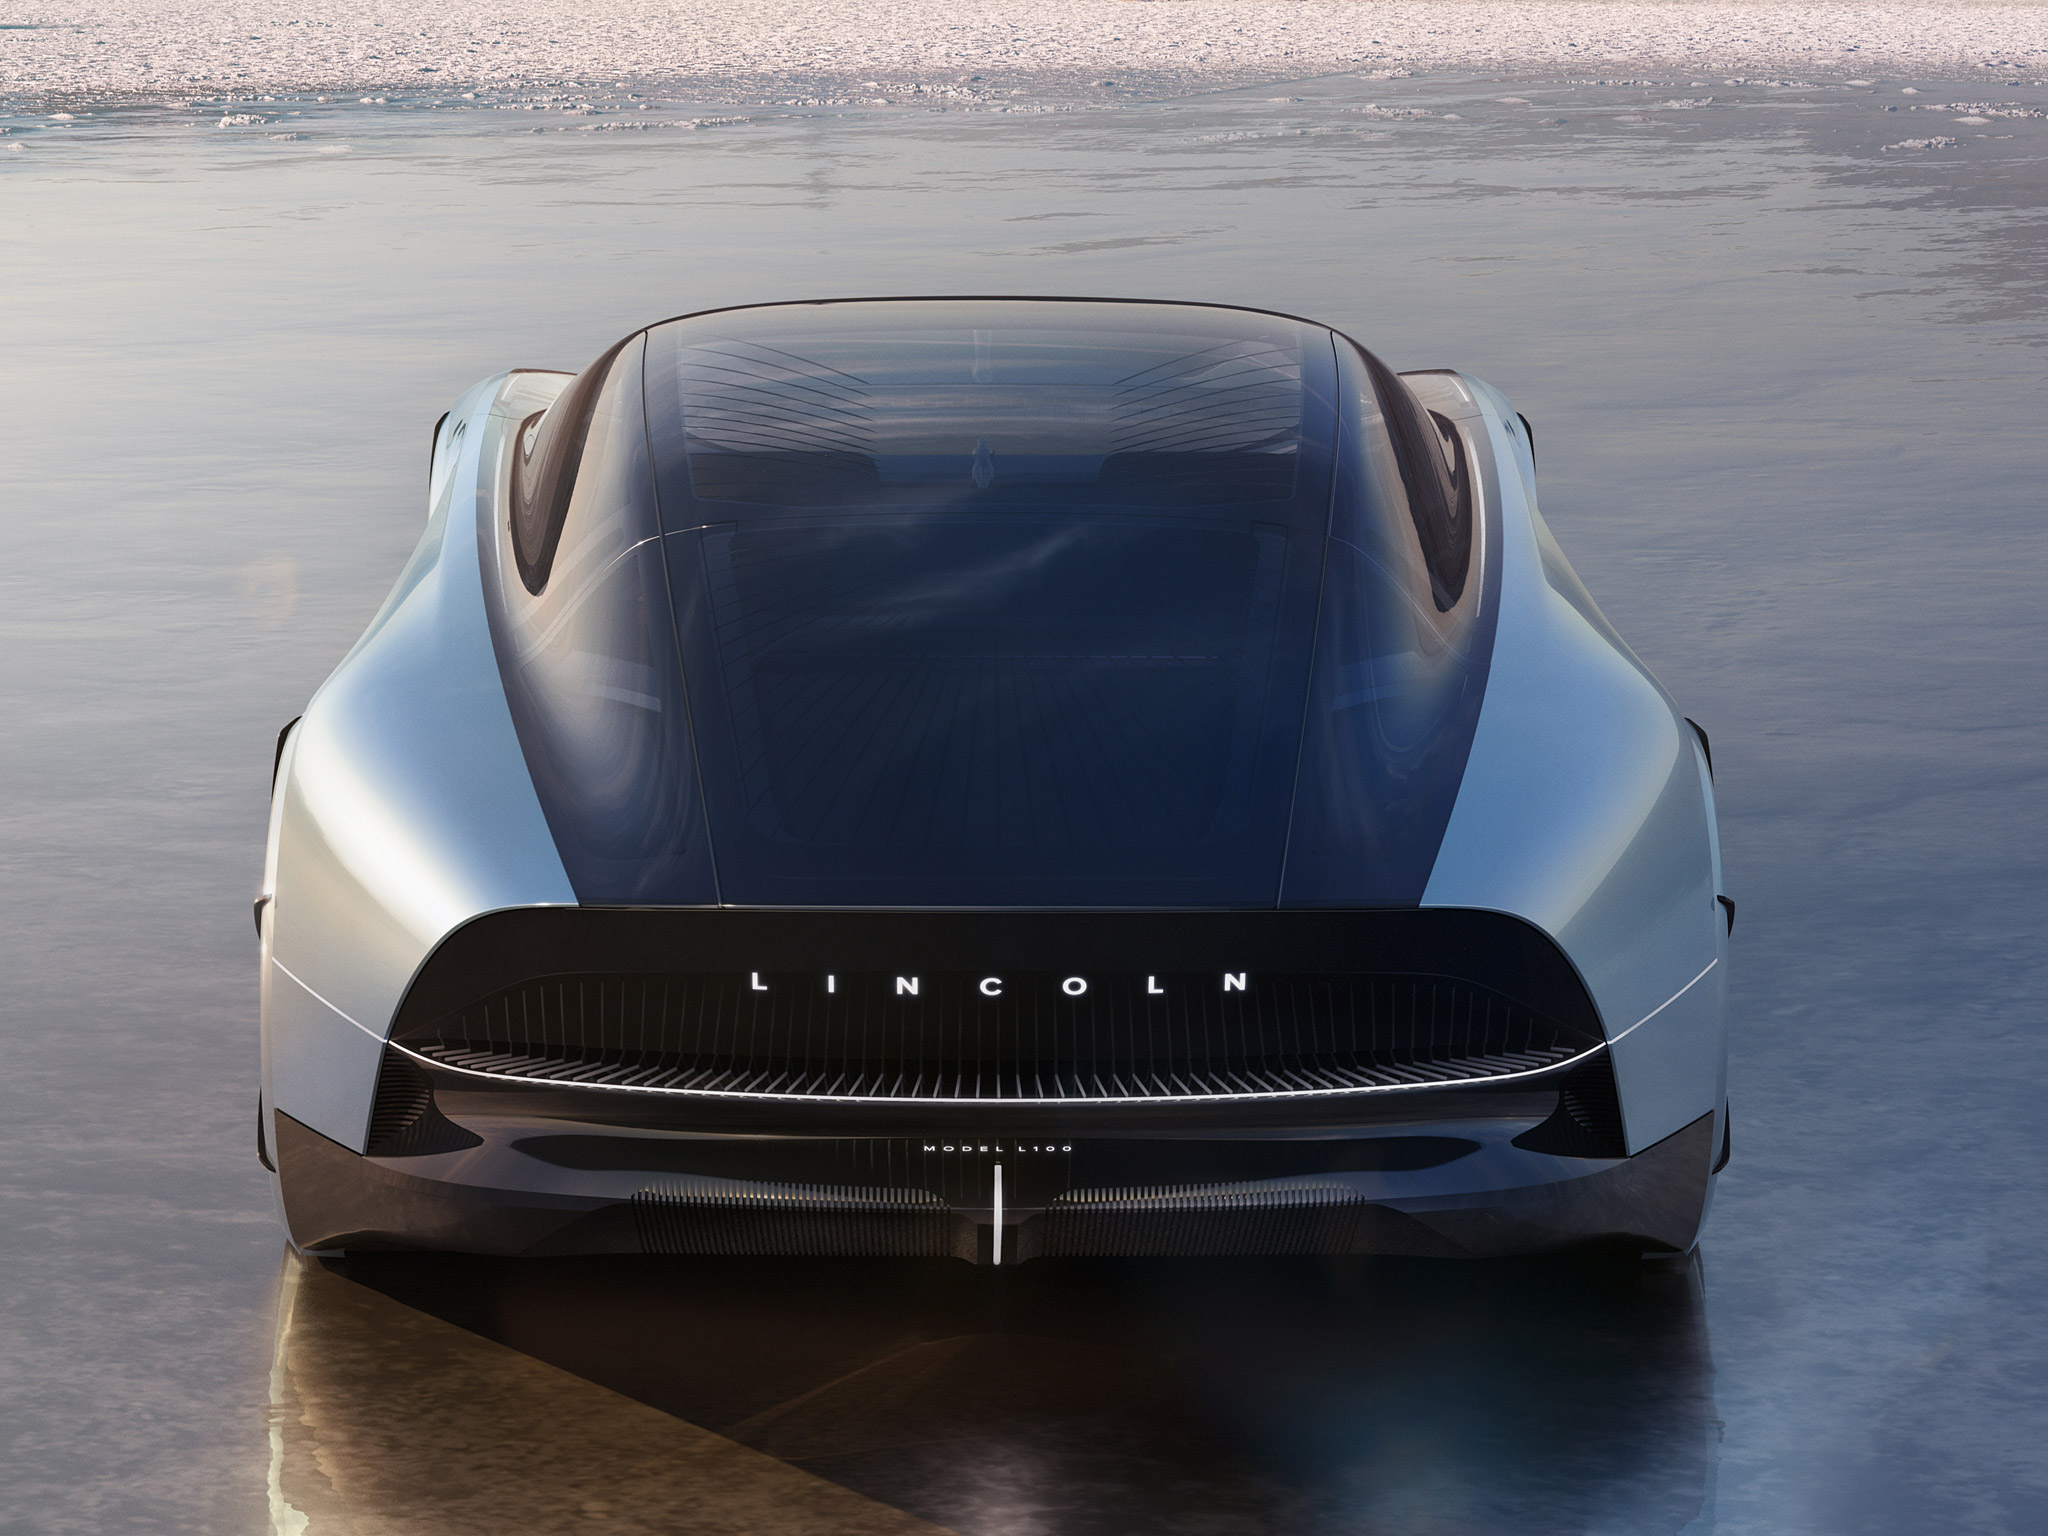  2022 Lincoln Model L100 Concept Wallpaper.